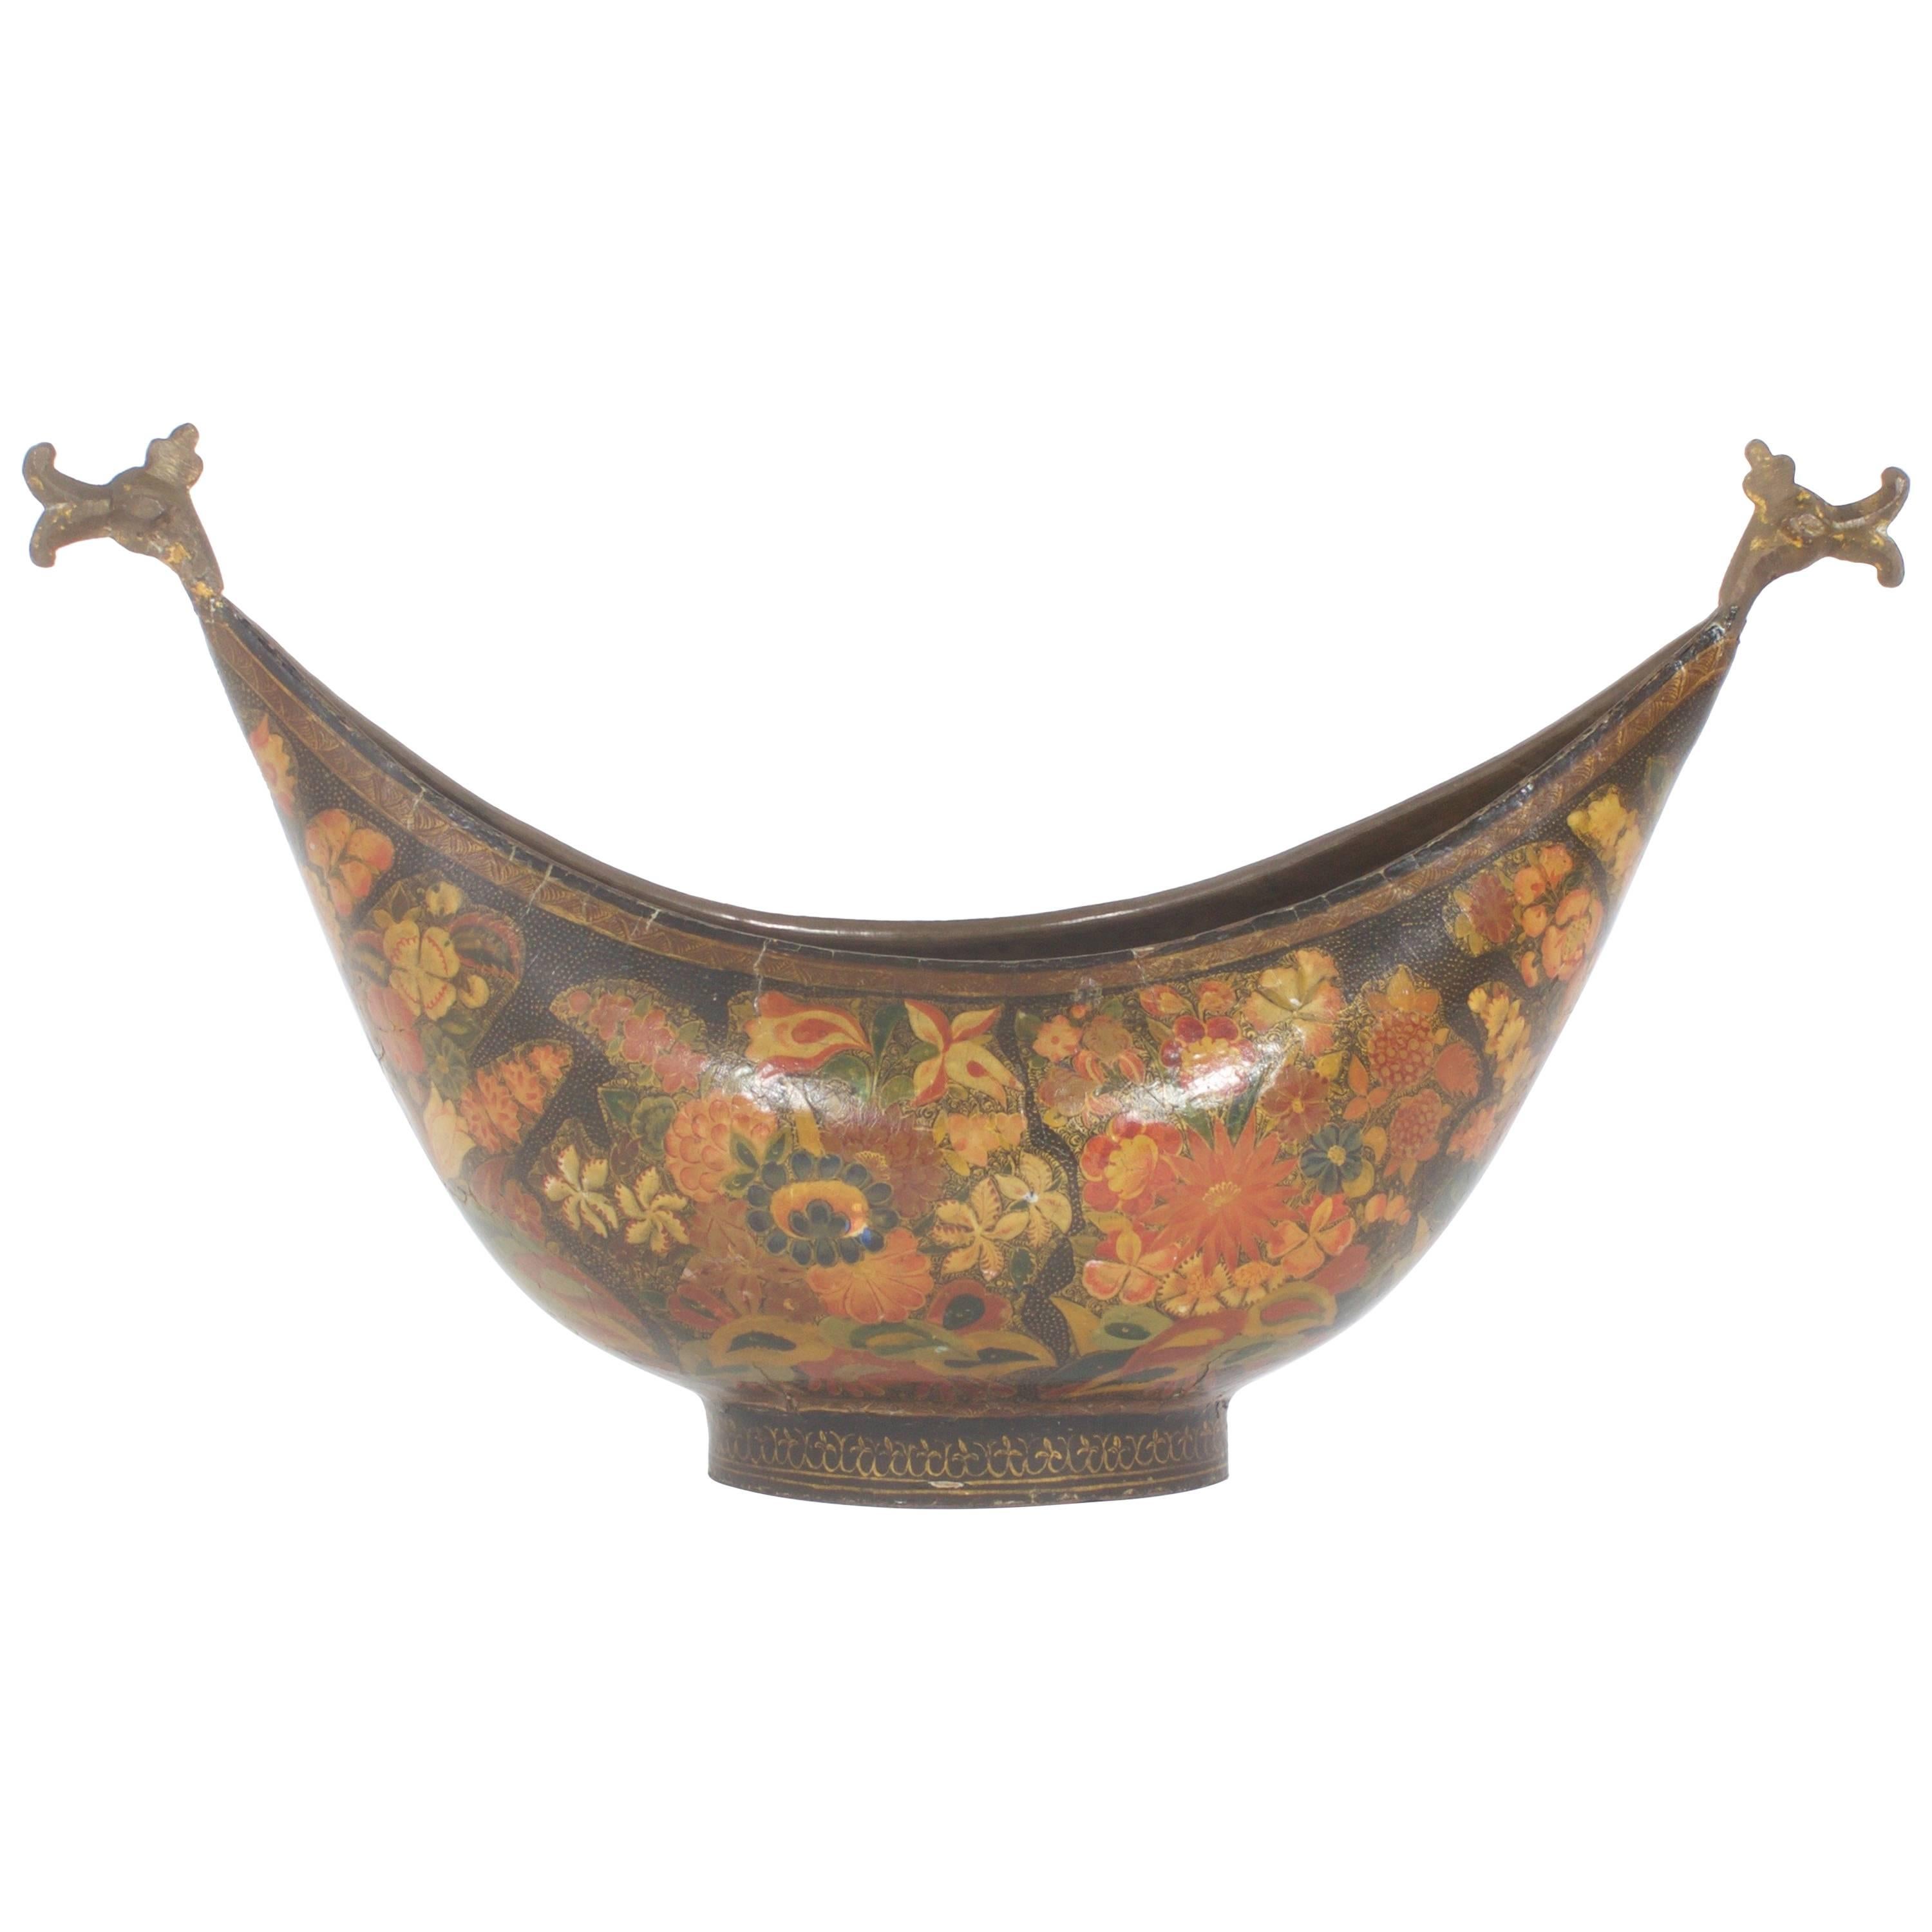 Antique Anglo Indian Kashmiri Bowl